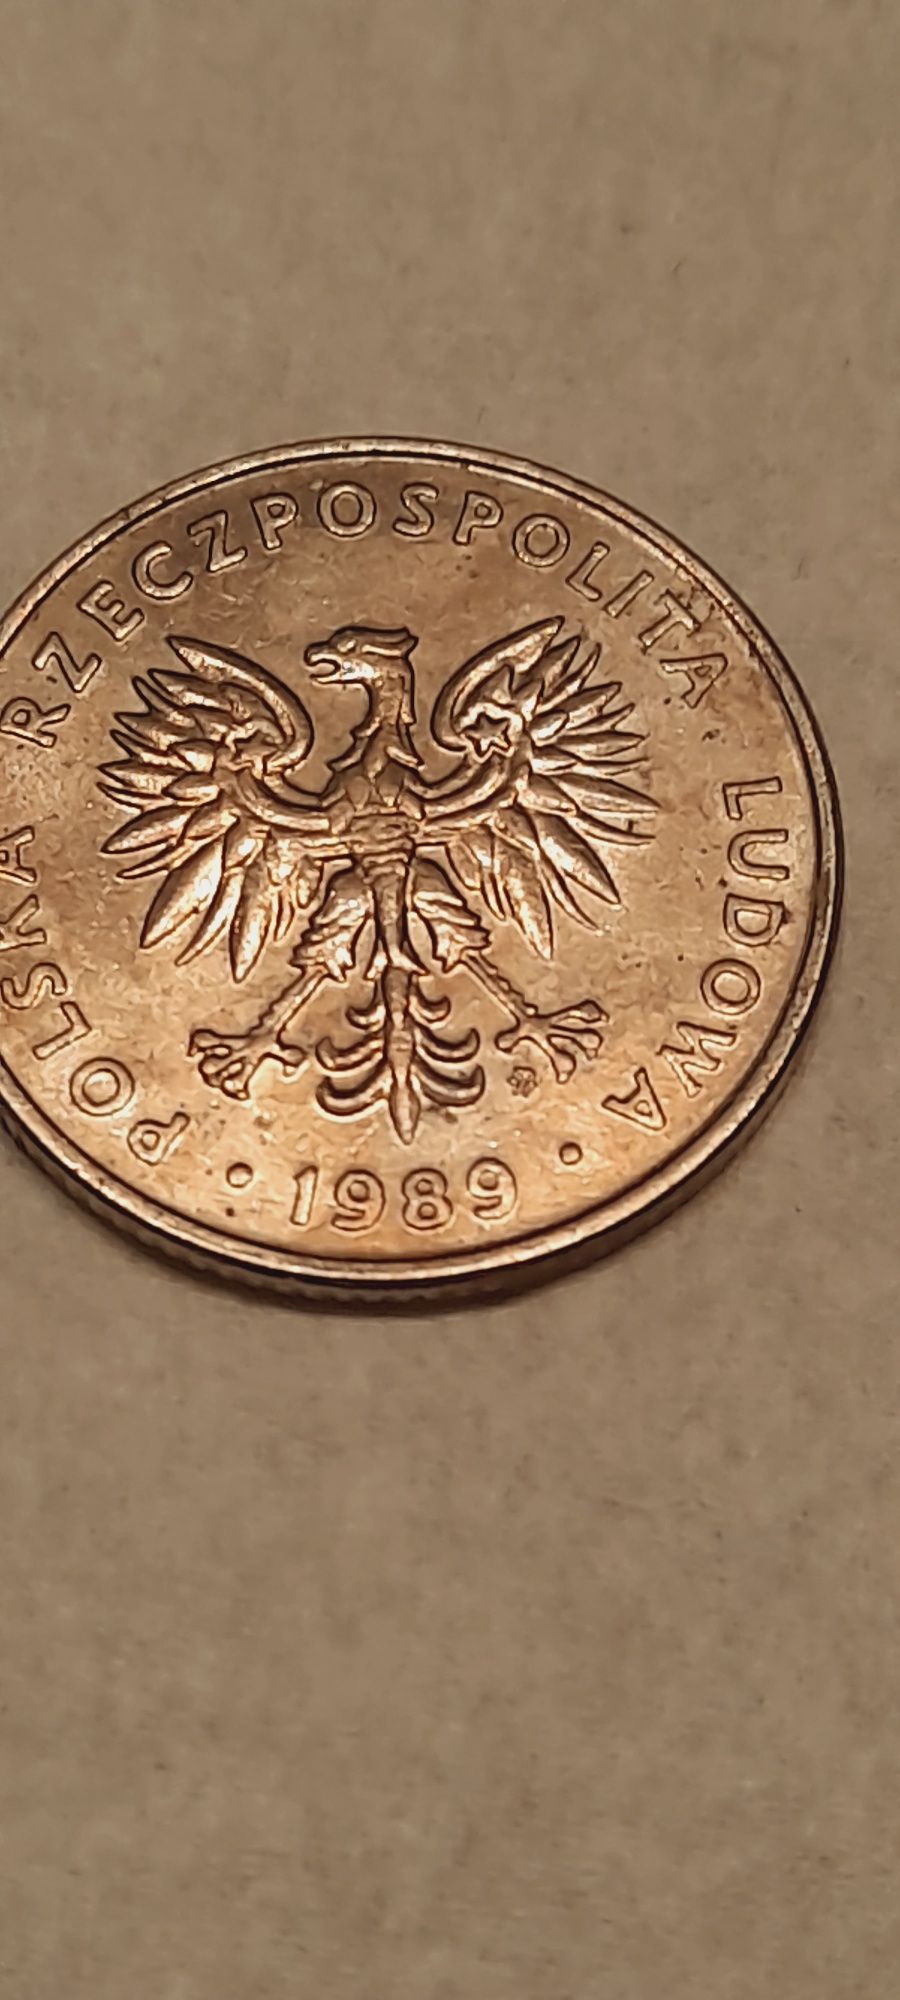 Moneta 20 zł z 1989 roku